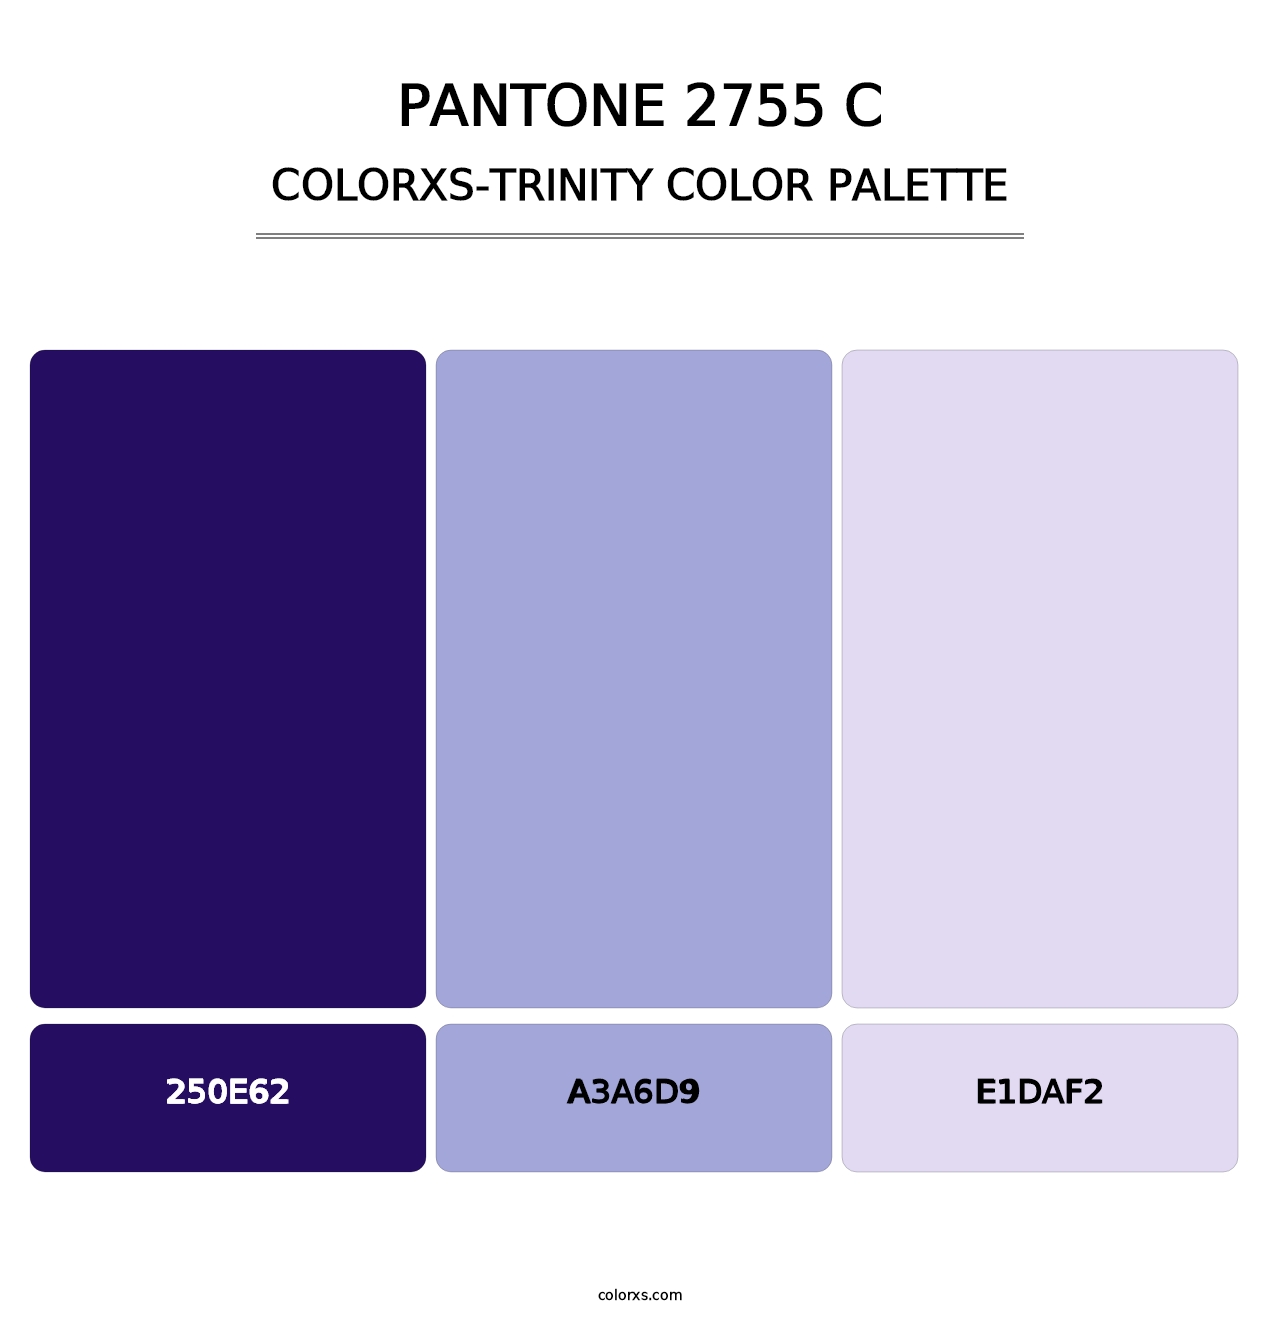 PANTONE 2755 C - Colorxs Trinity Palette